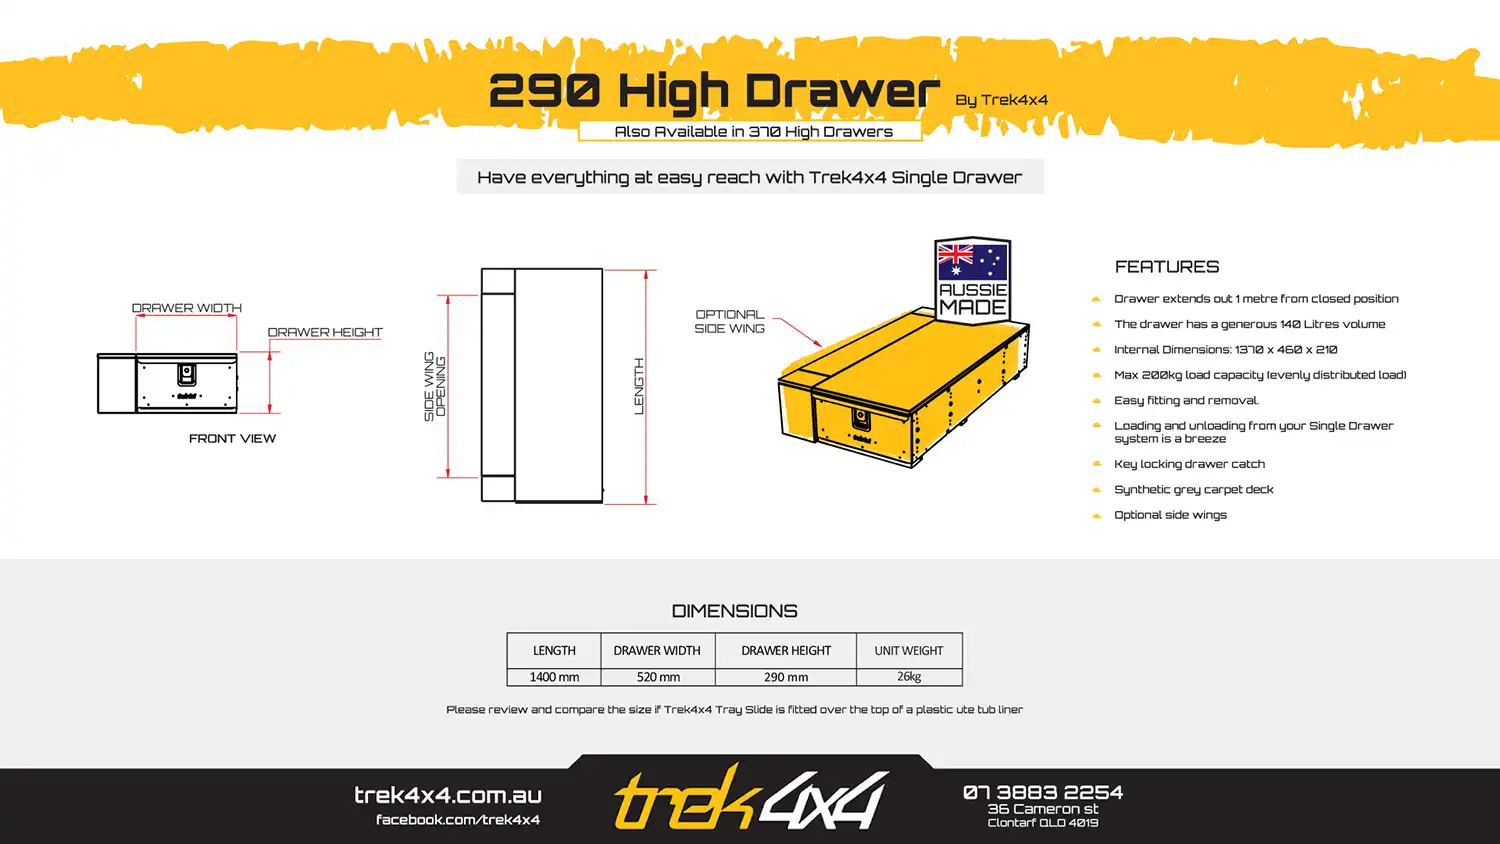 290mm High Single Drawers by Trek 4x4